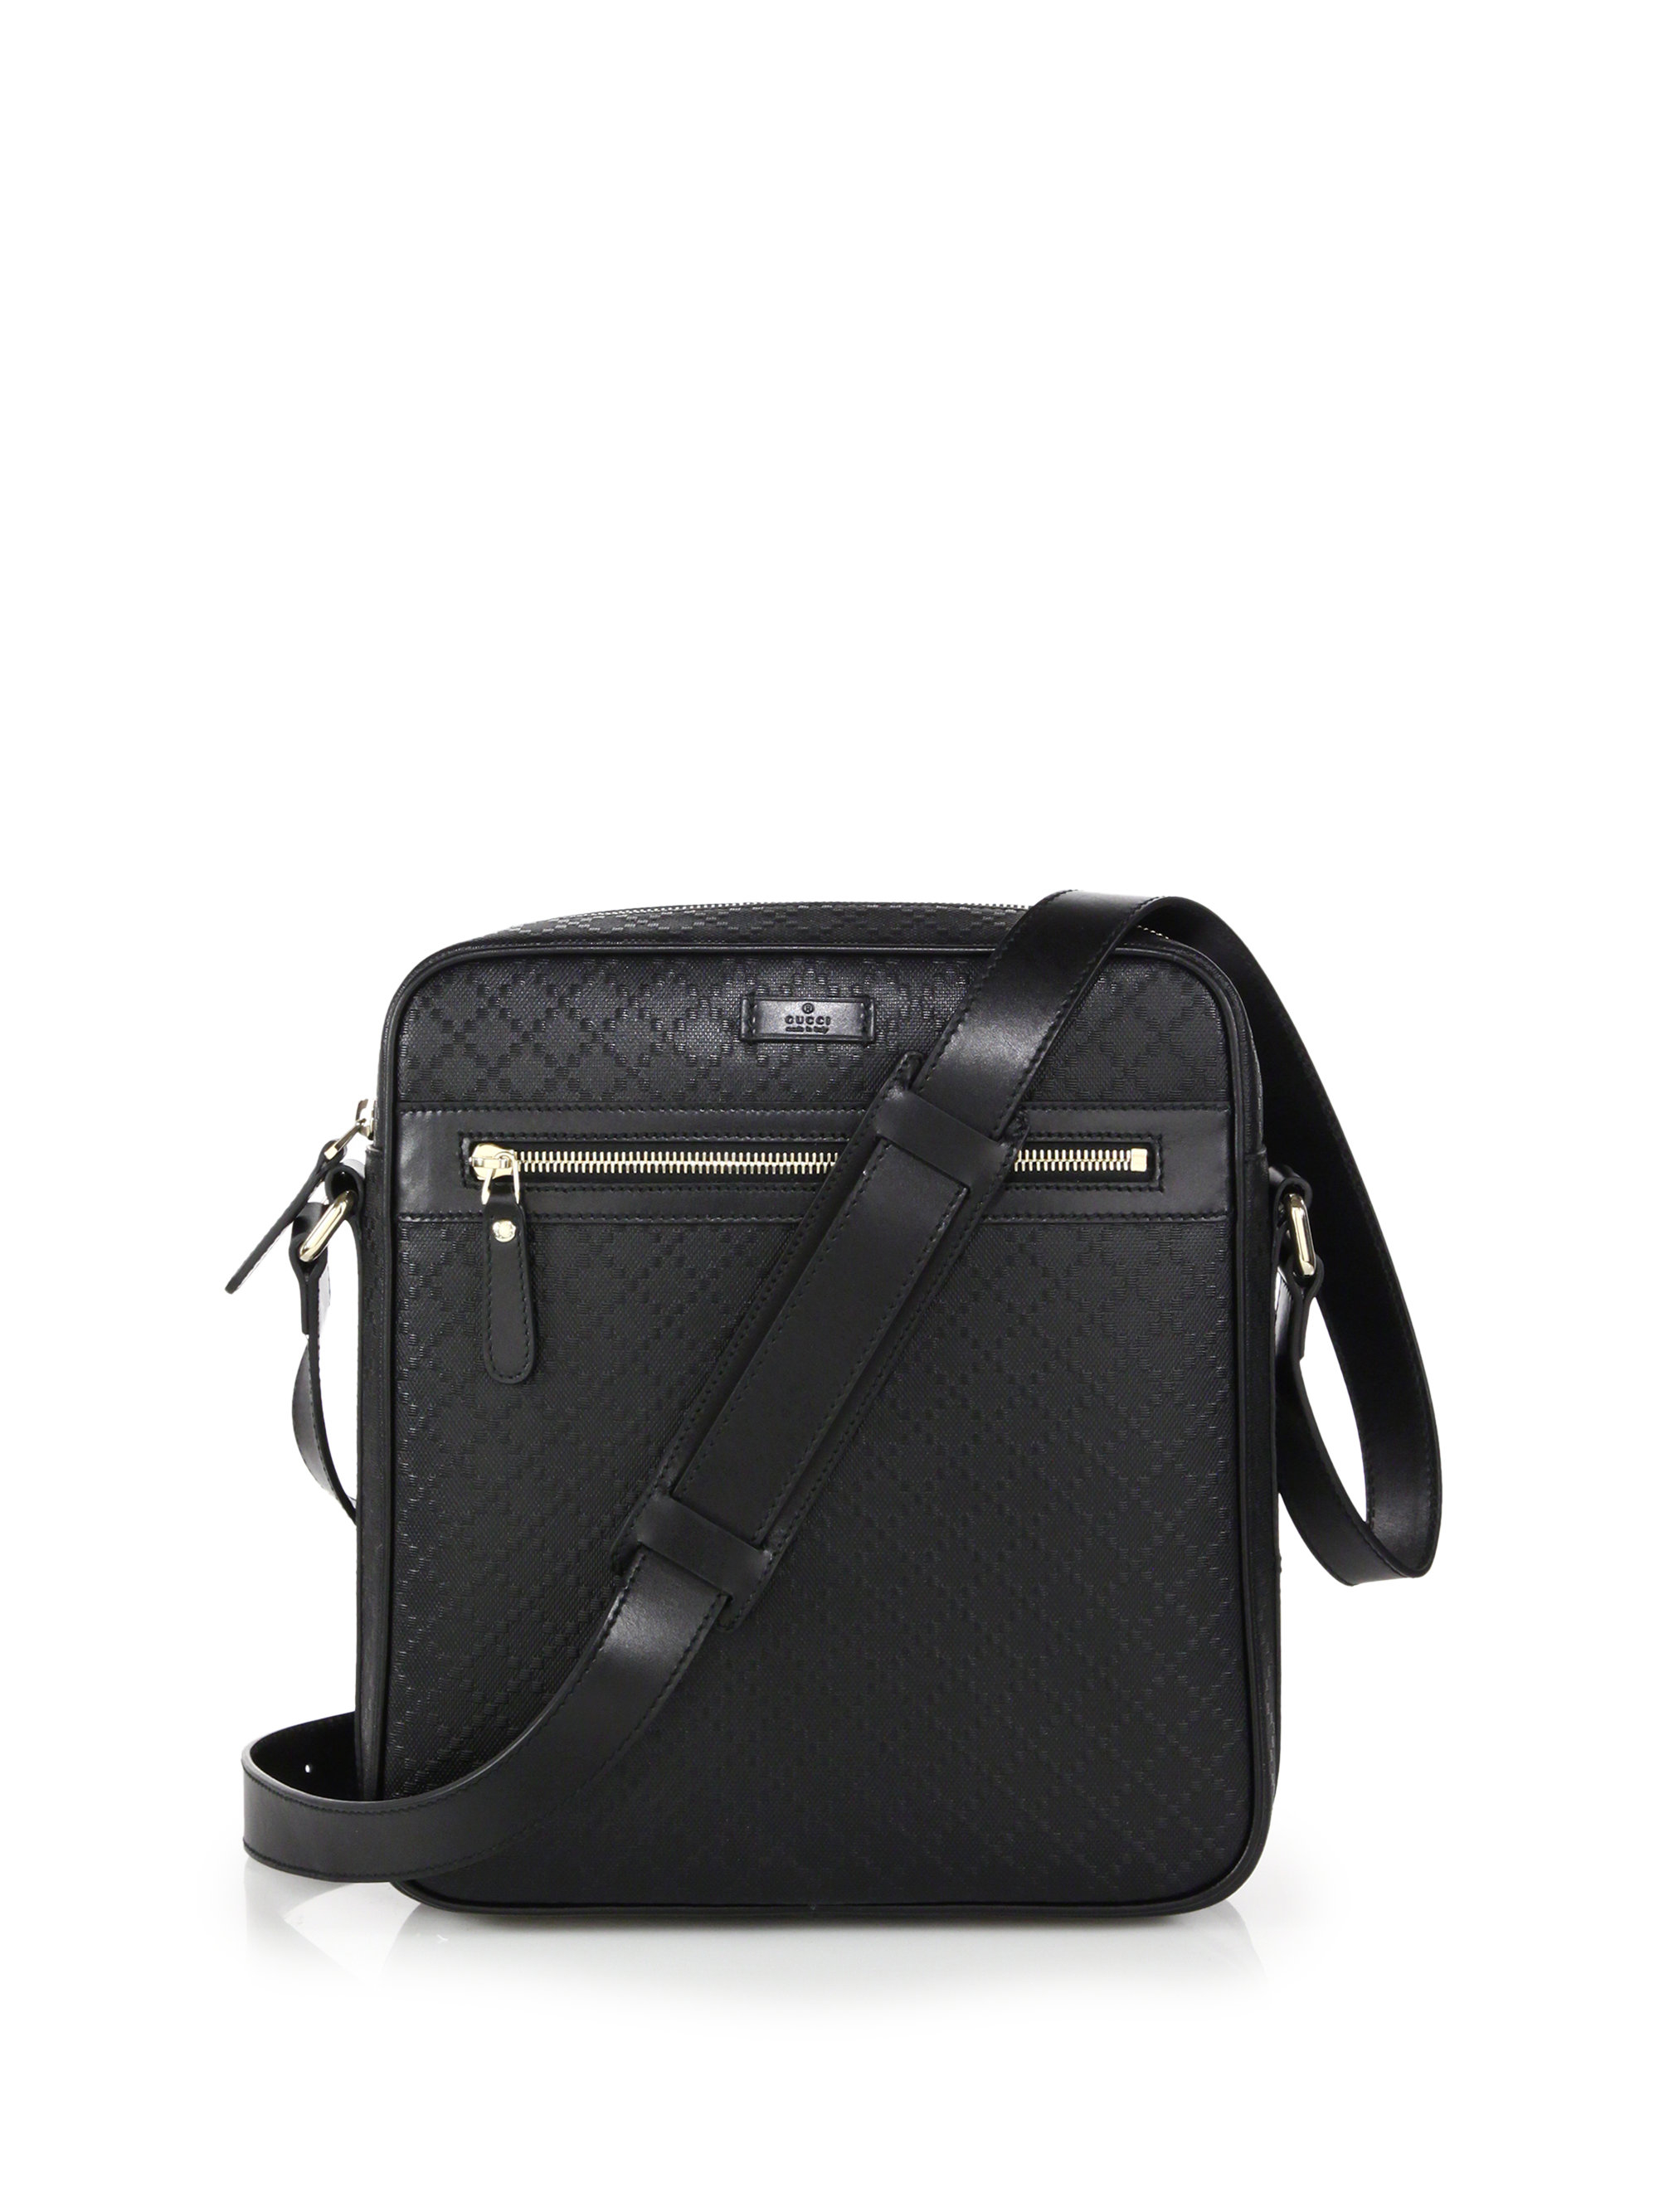 Gucci Bright Diamante Leather Shoulder Bag in Black for Men | Lyst